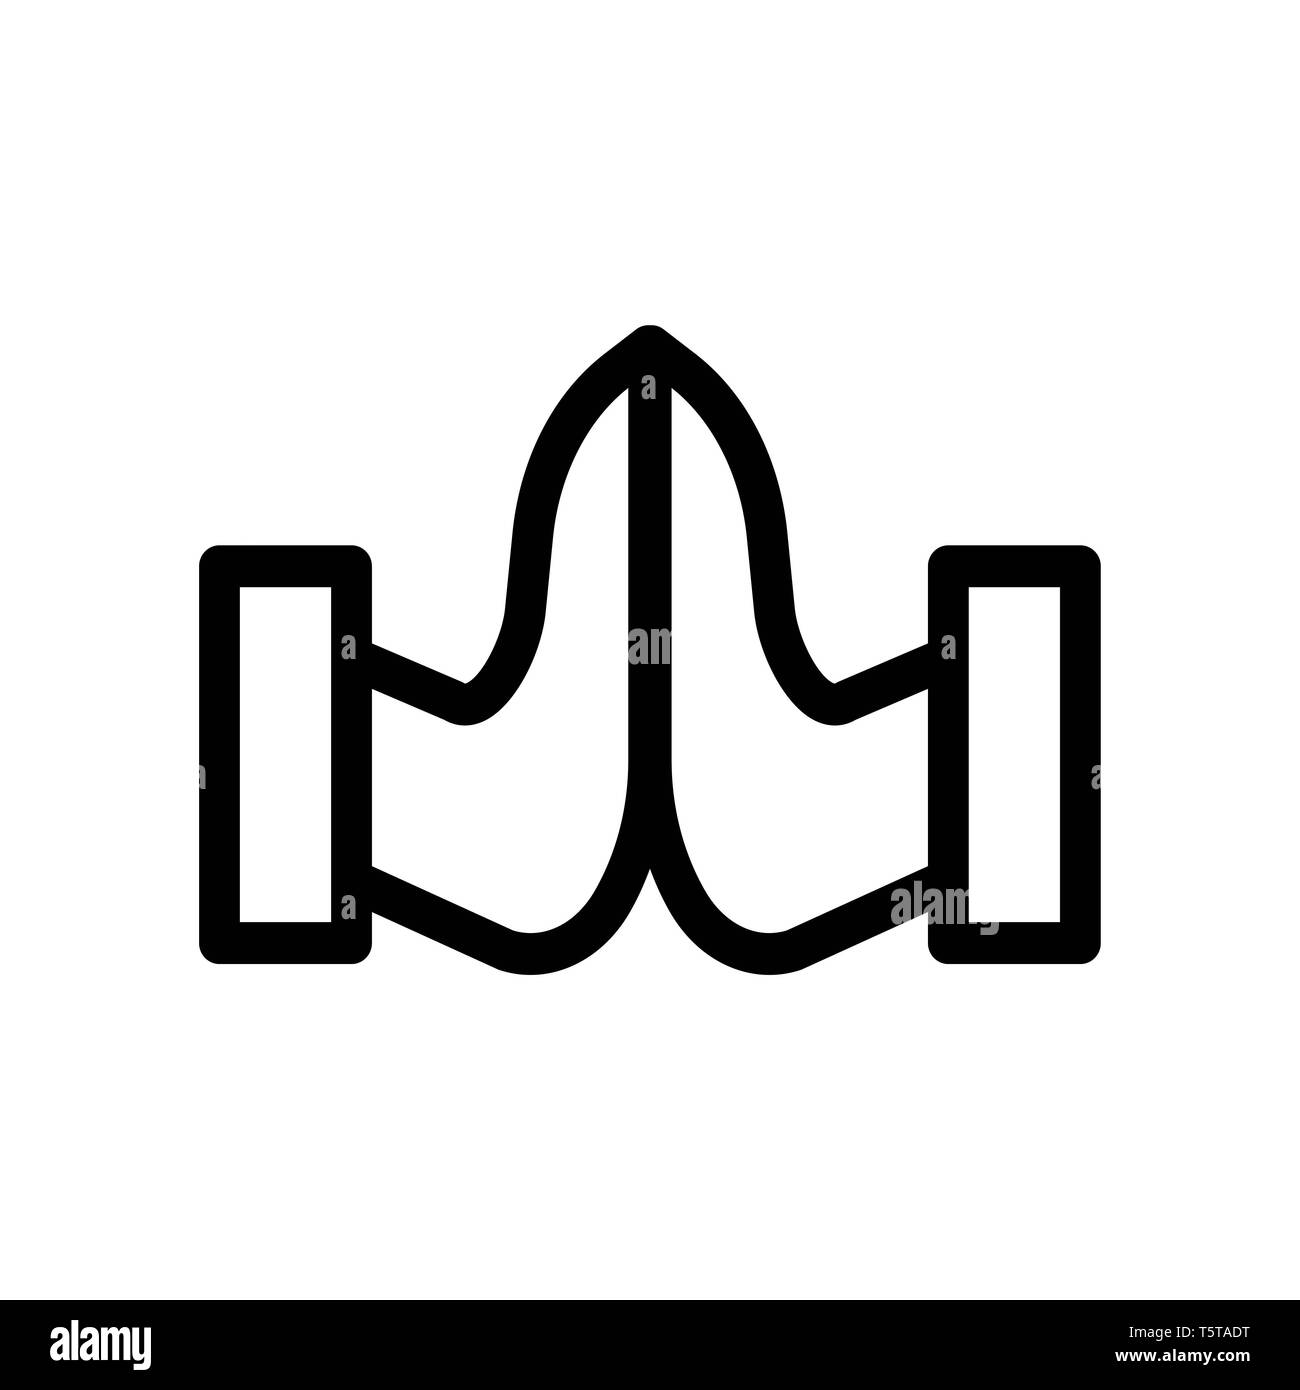 Ramadan Pray Prayer Peace Forgive Islam Religion Culture Vector Line Icons. Editable Stroke and color. Stock Photo